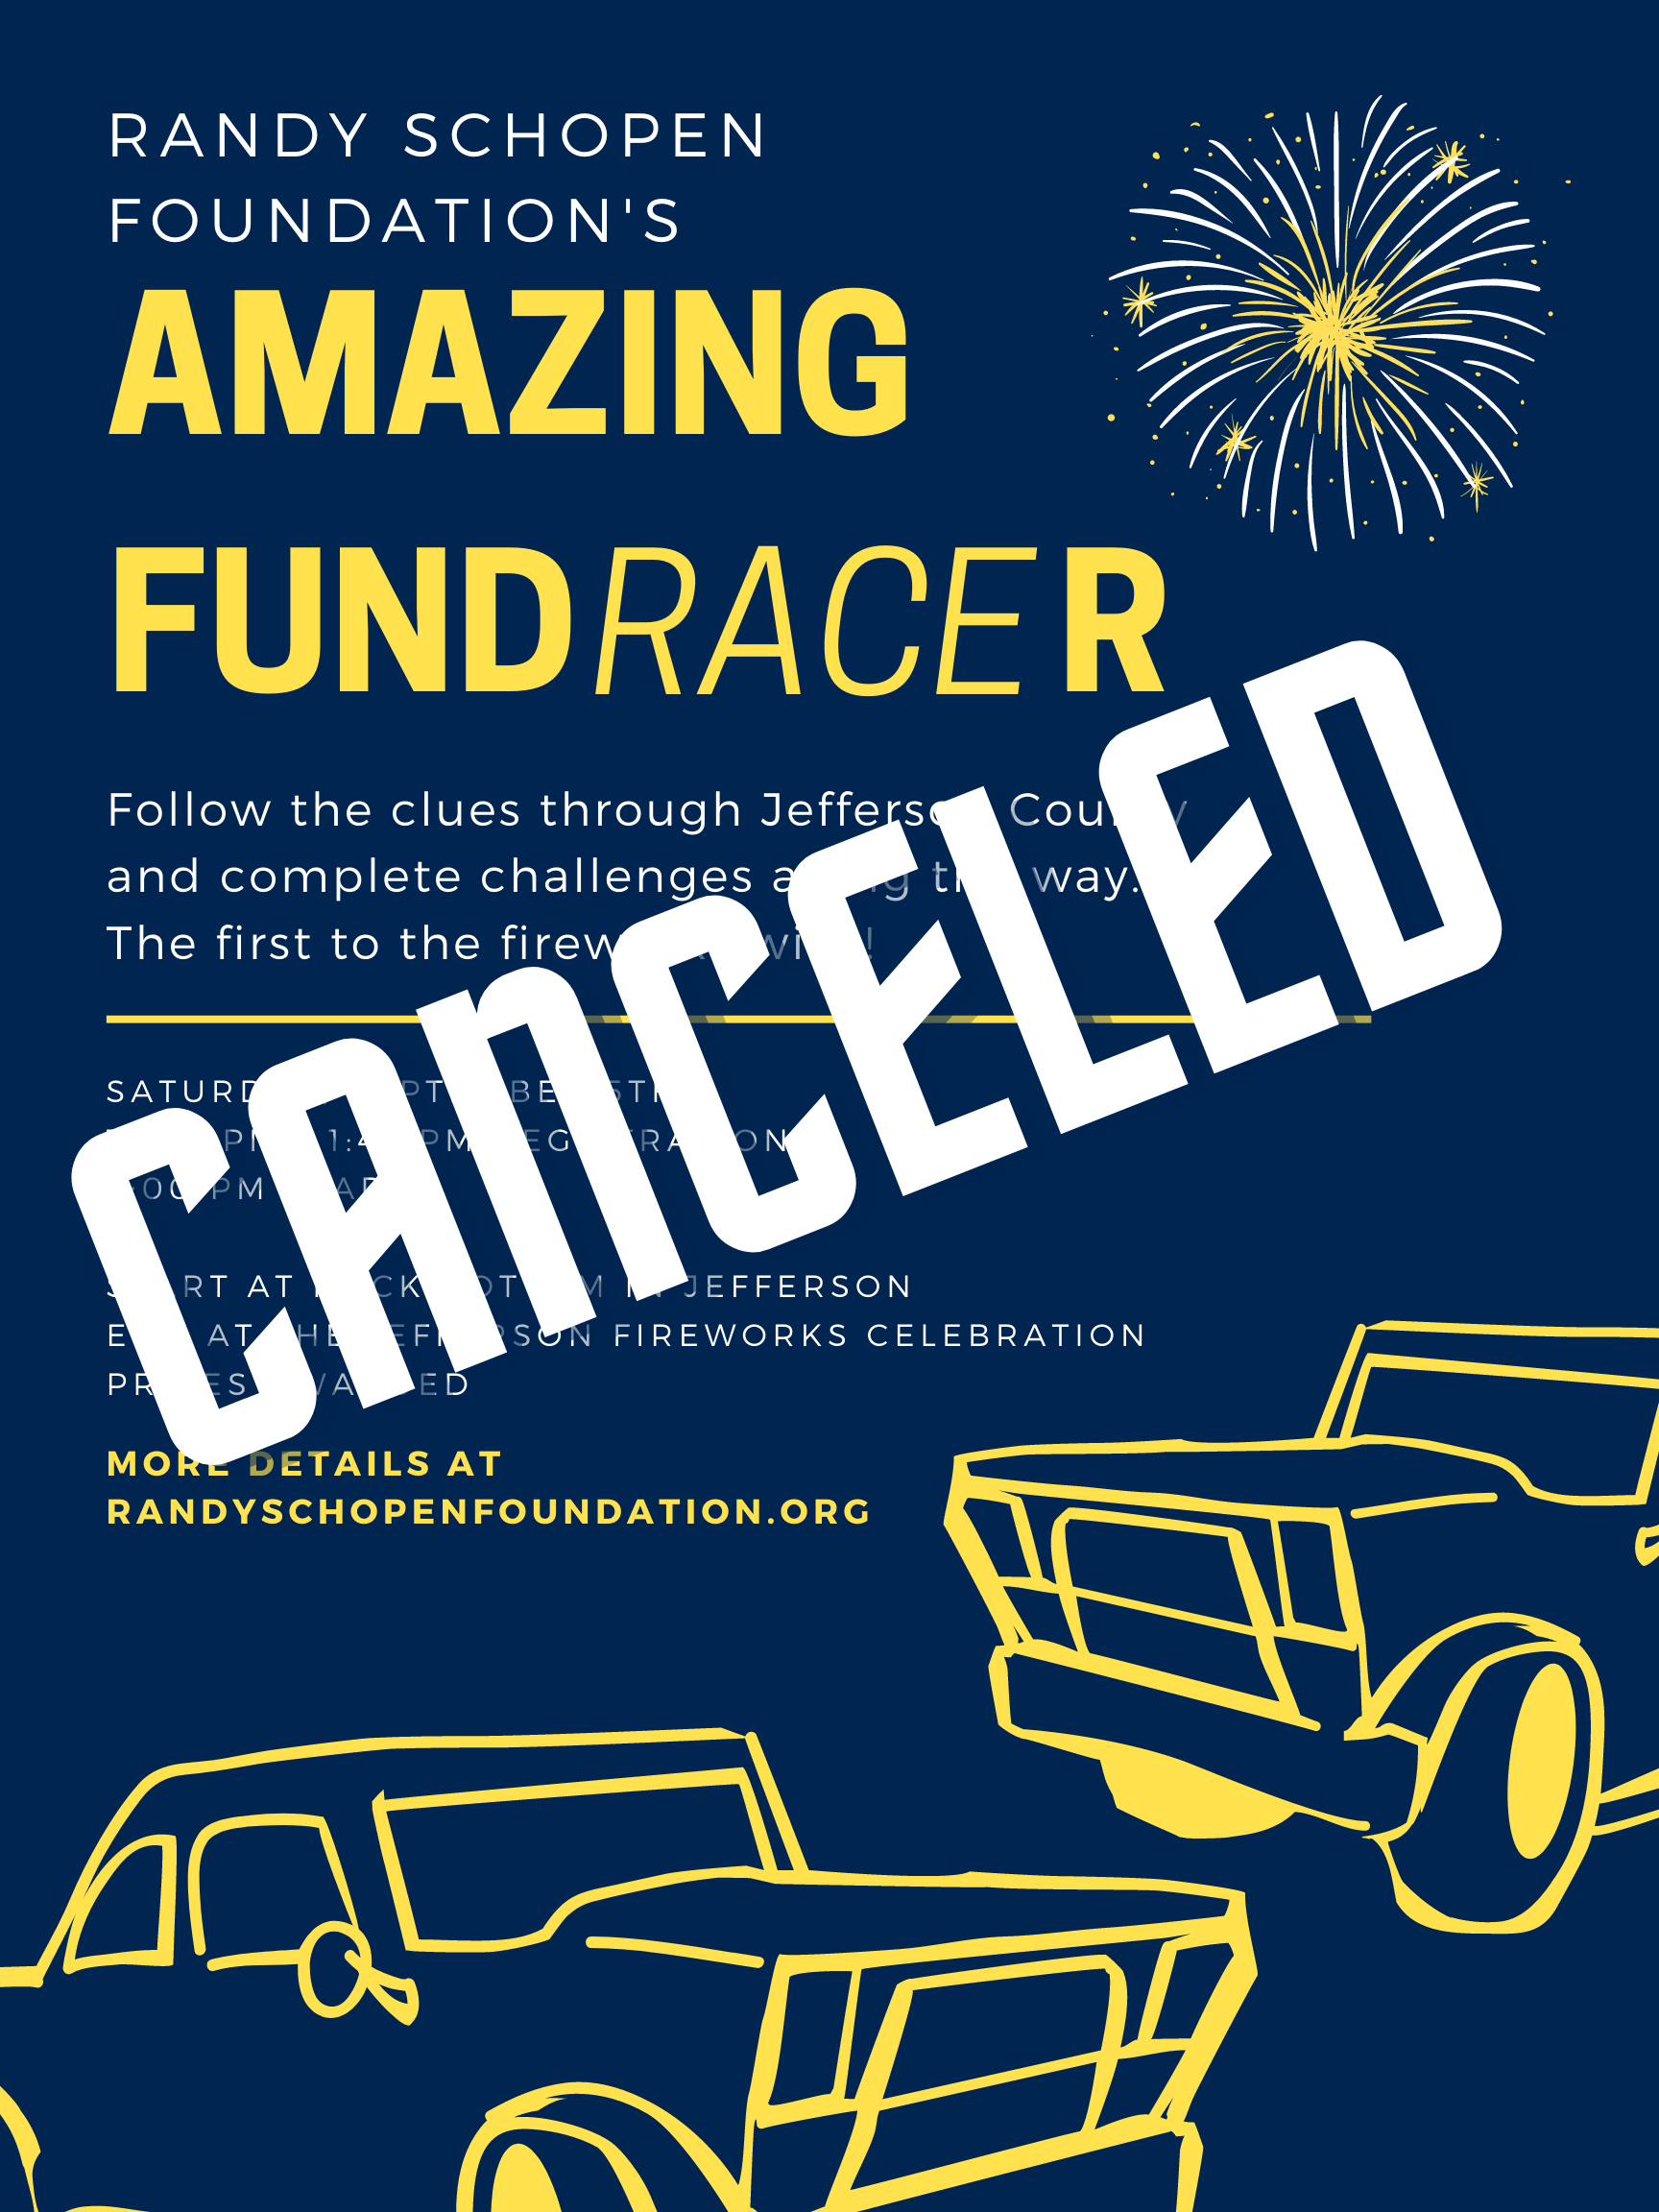 Randy Schopen Foundation Amazing Fundracer